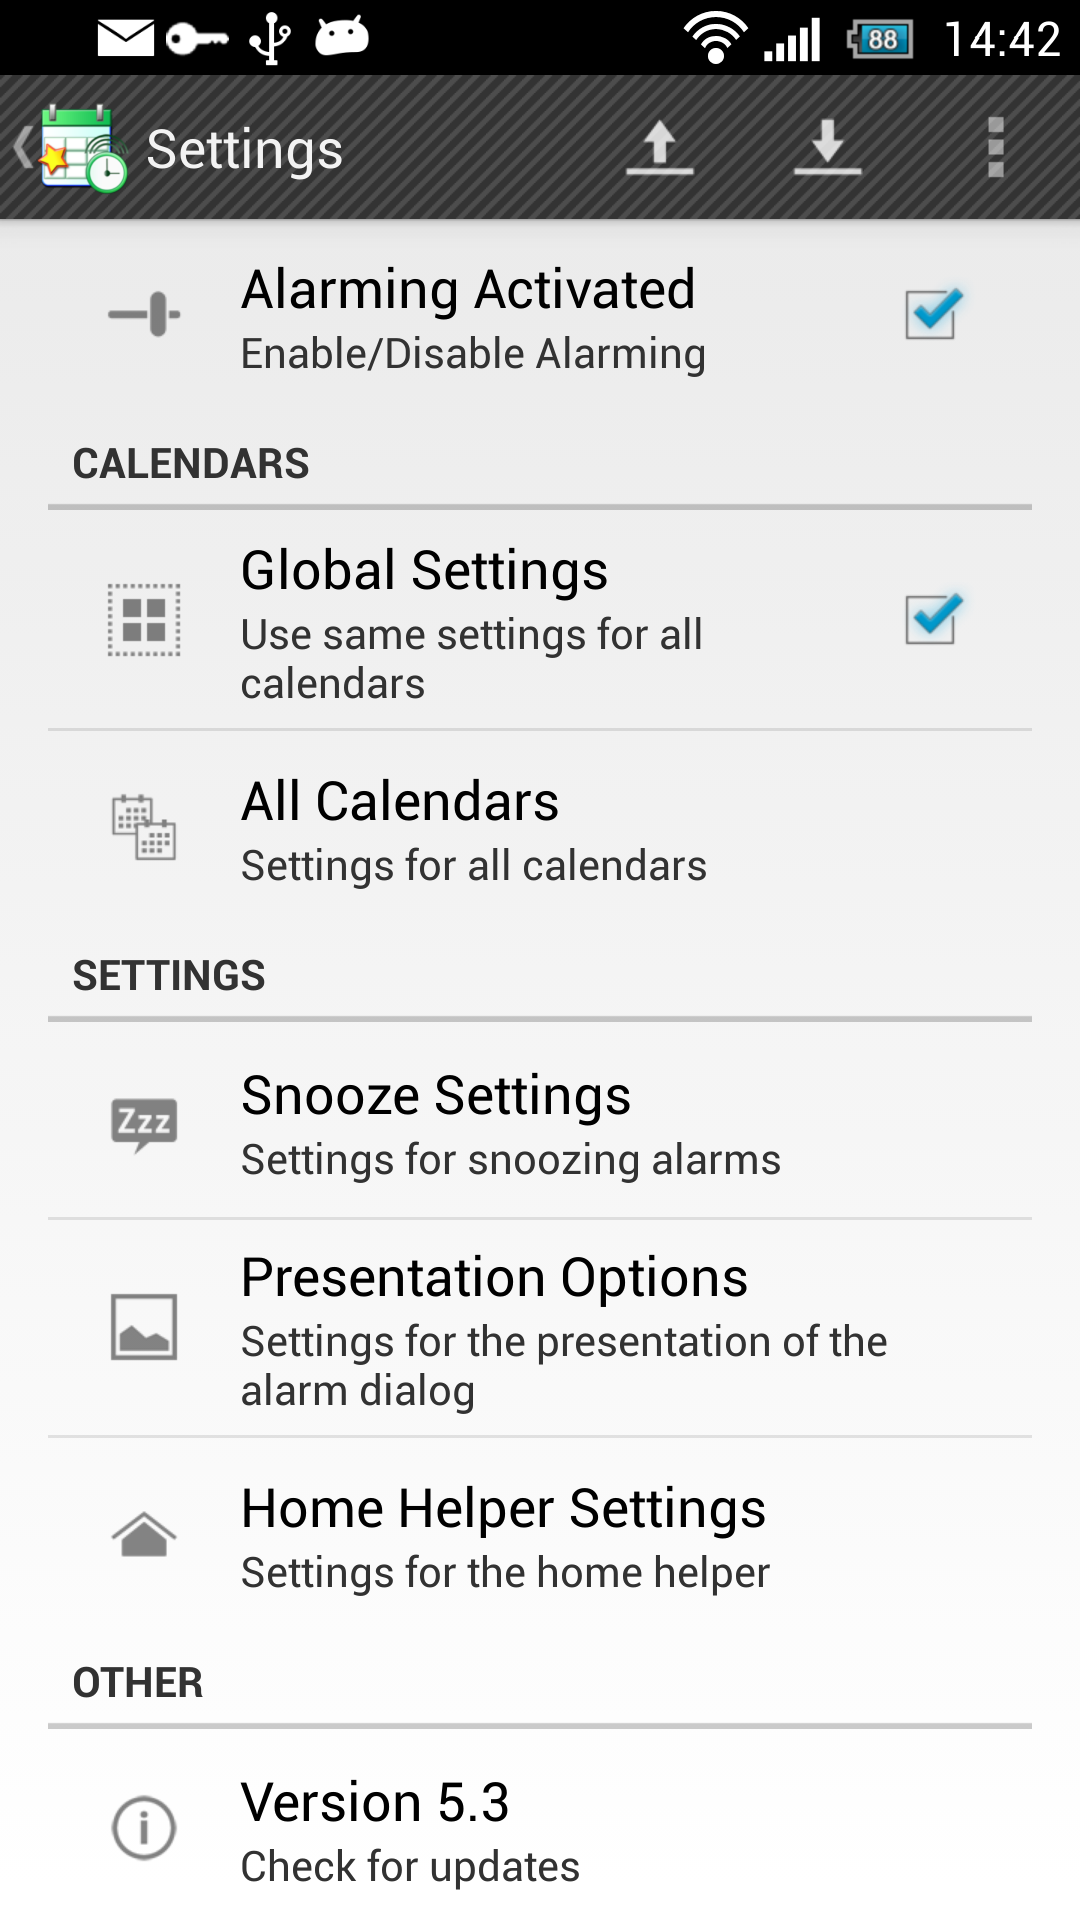 Android App Calendar Event Reminder foobarblog 2.0